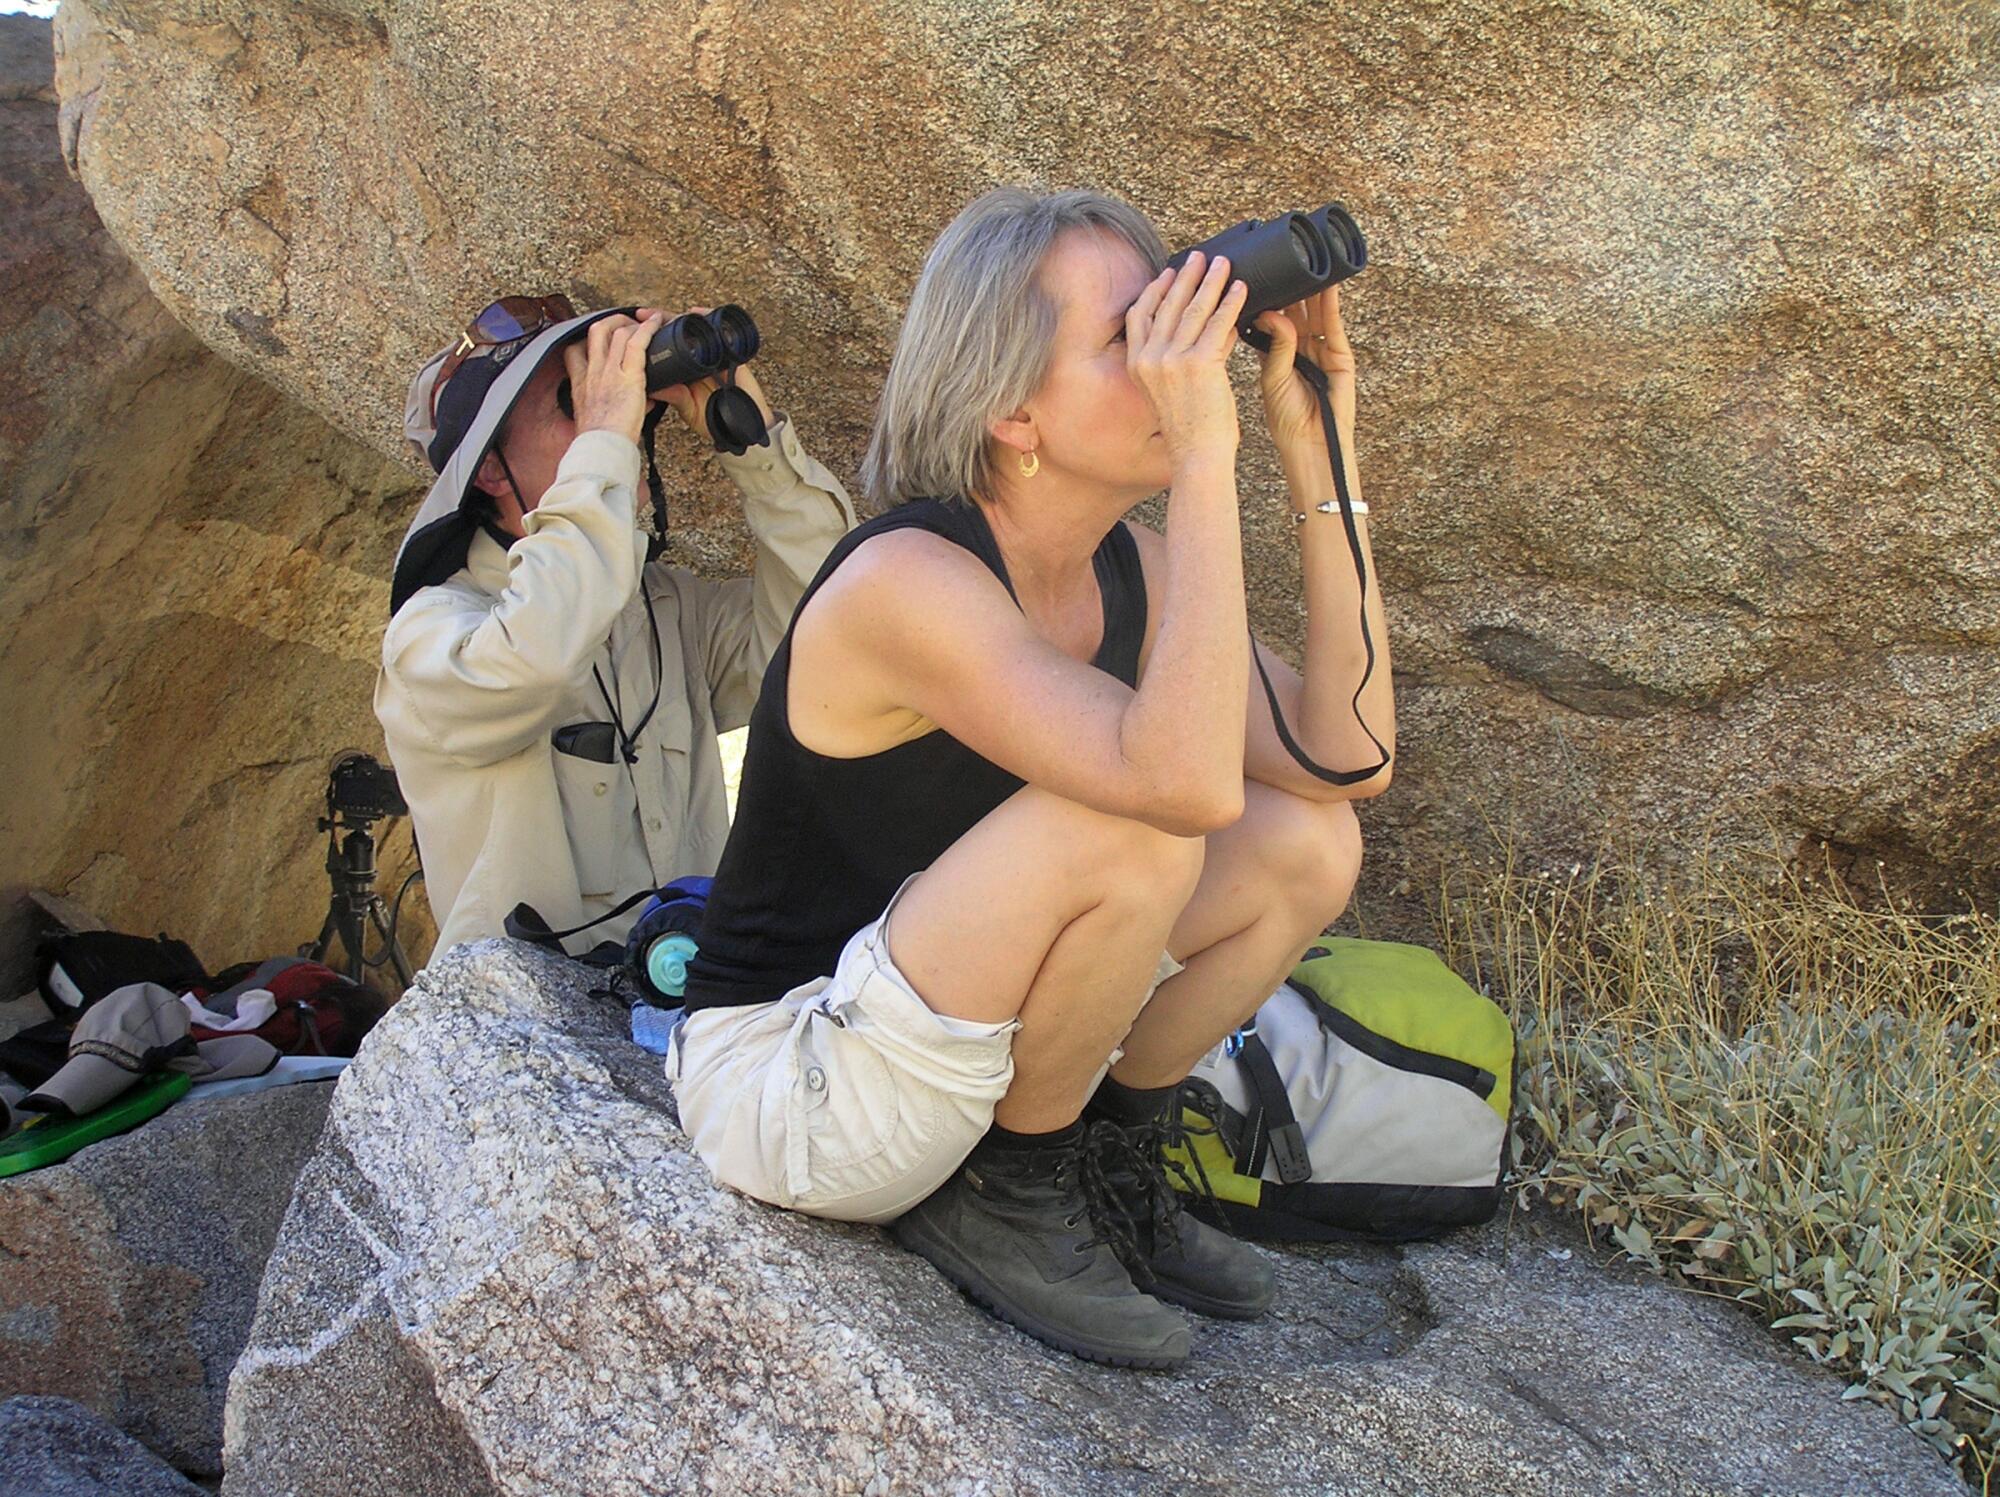 Phillip Roullard and Denise Zuranski look through binoculars amid rocks in the shade.